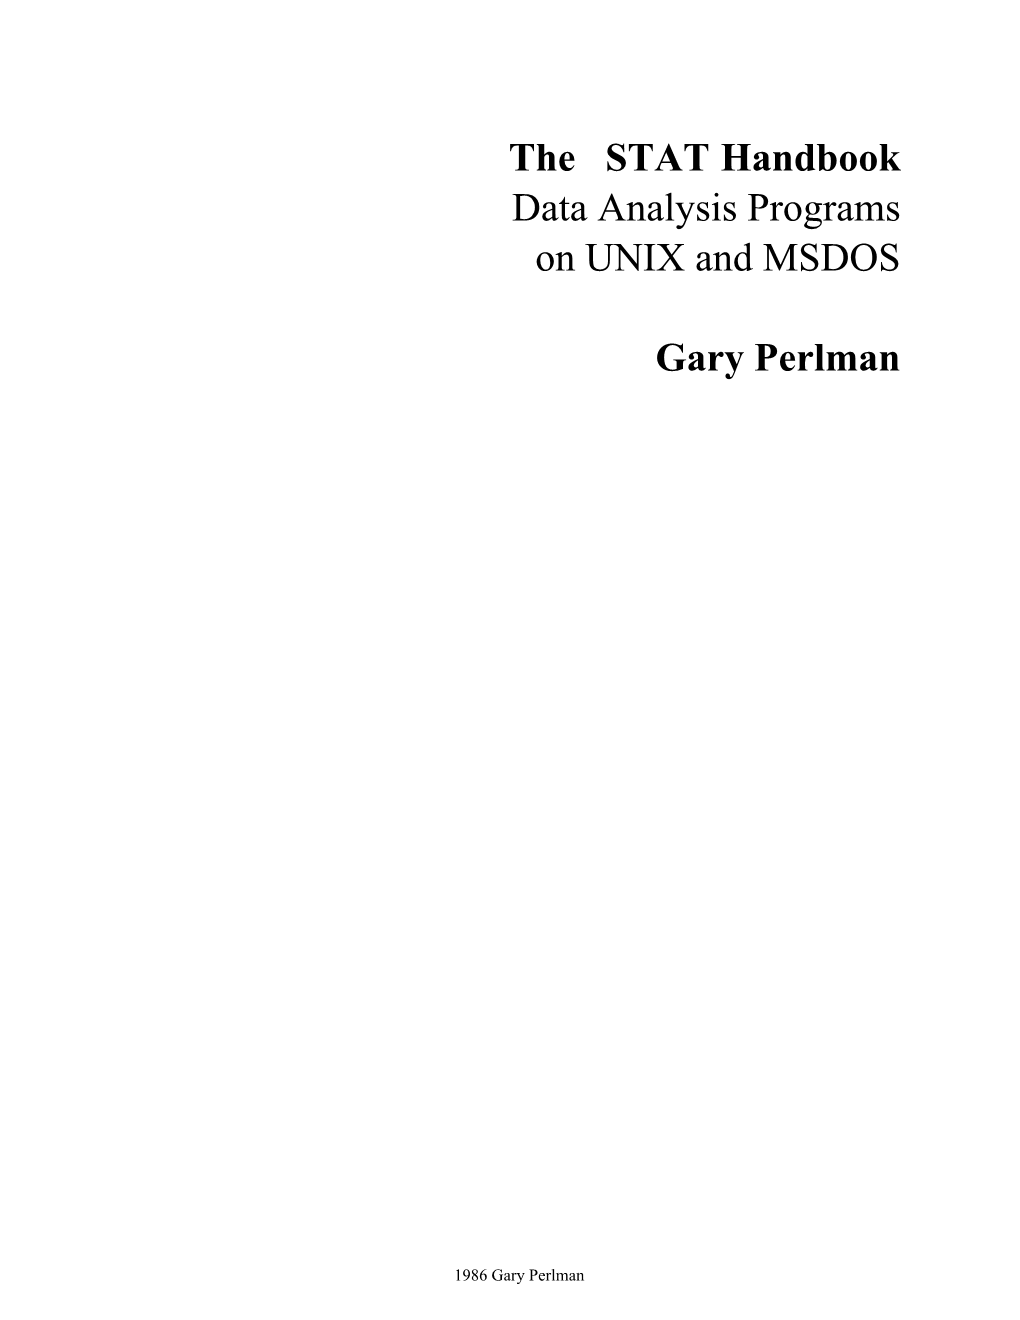 The STAT Handbook Data Analysis Programs on UNIX and MSDOS